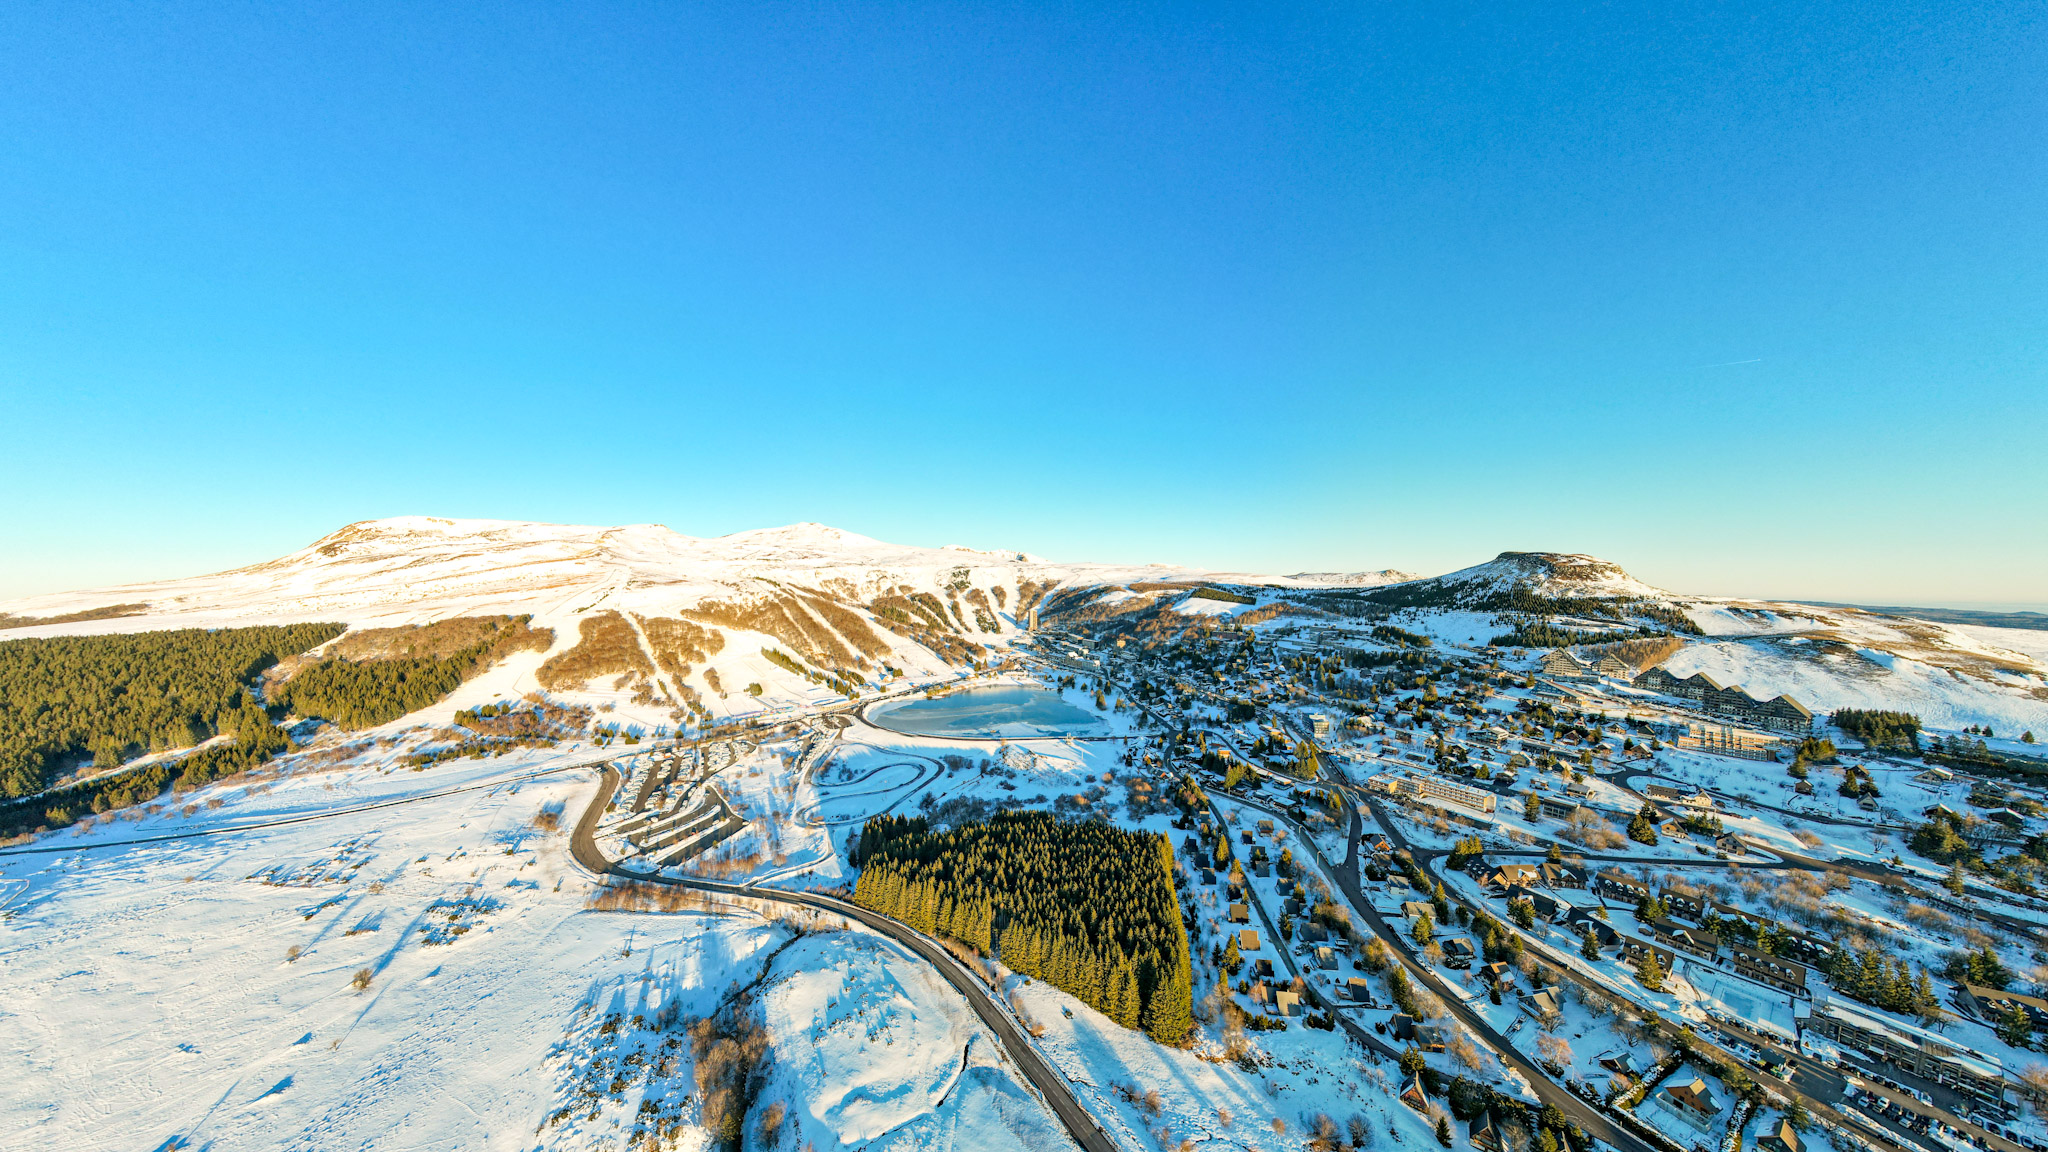 Station de ski de Super Besse vue du ciel